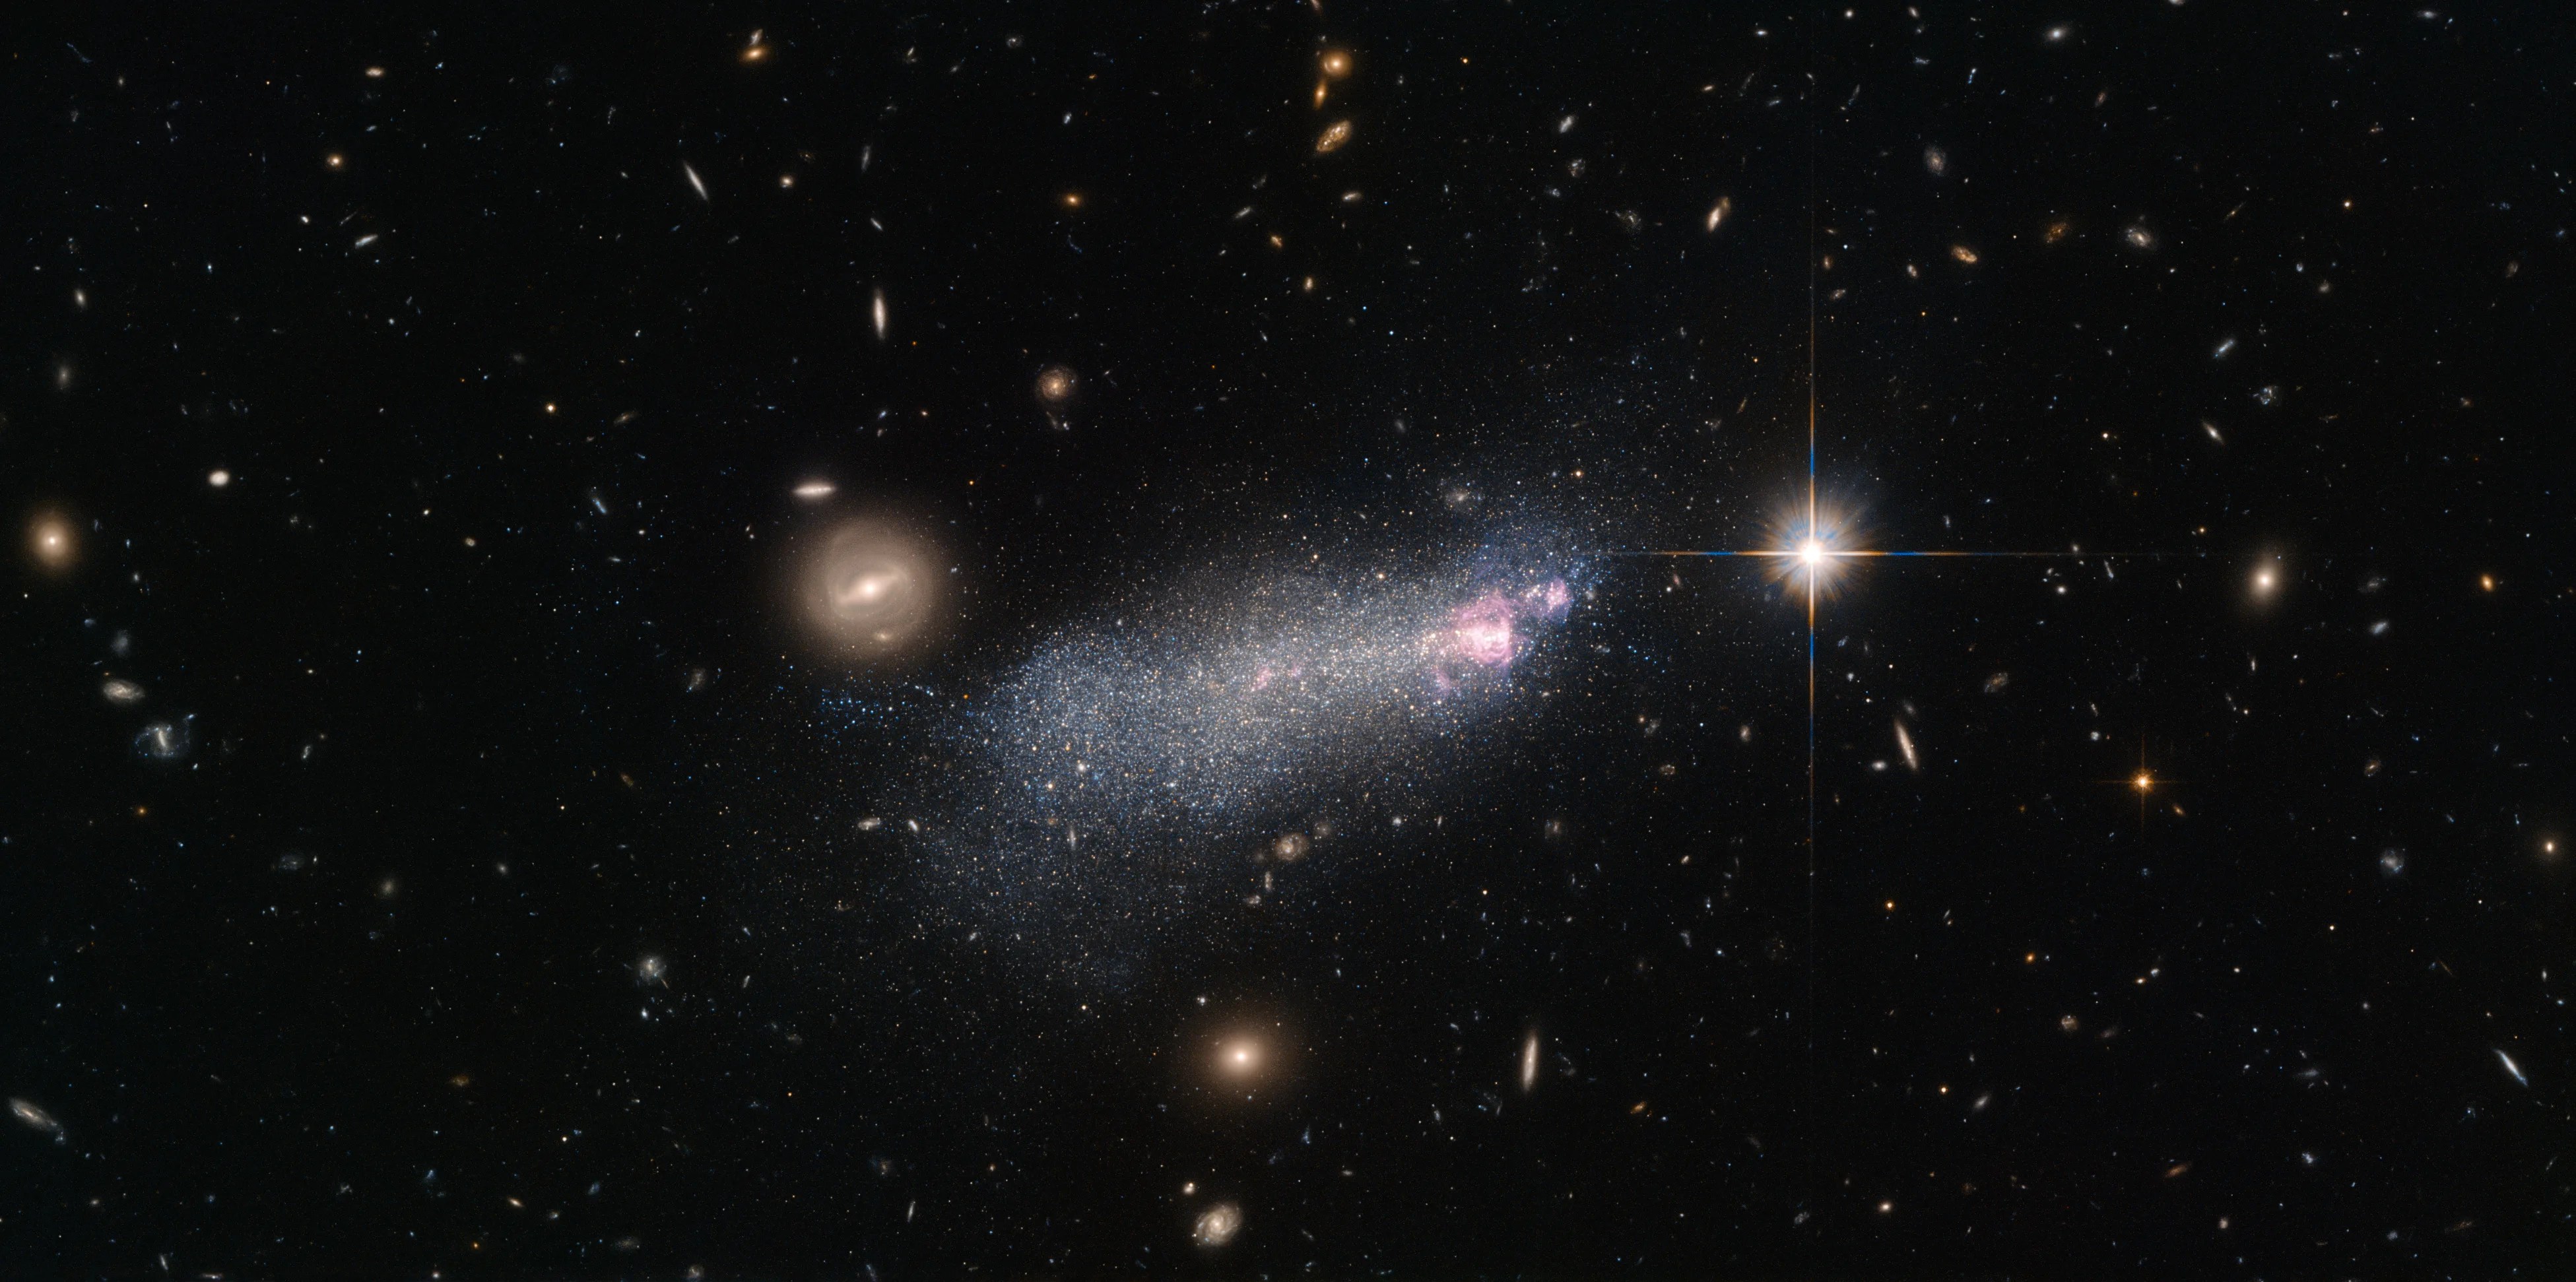 Galaxy sbs 1415+437 or sdss cgb 12067.1